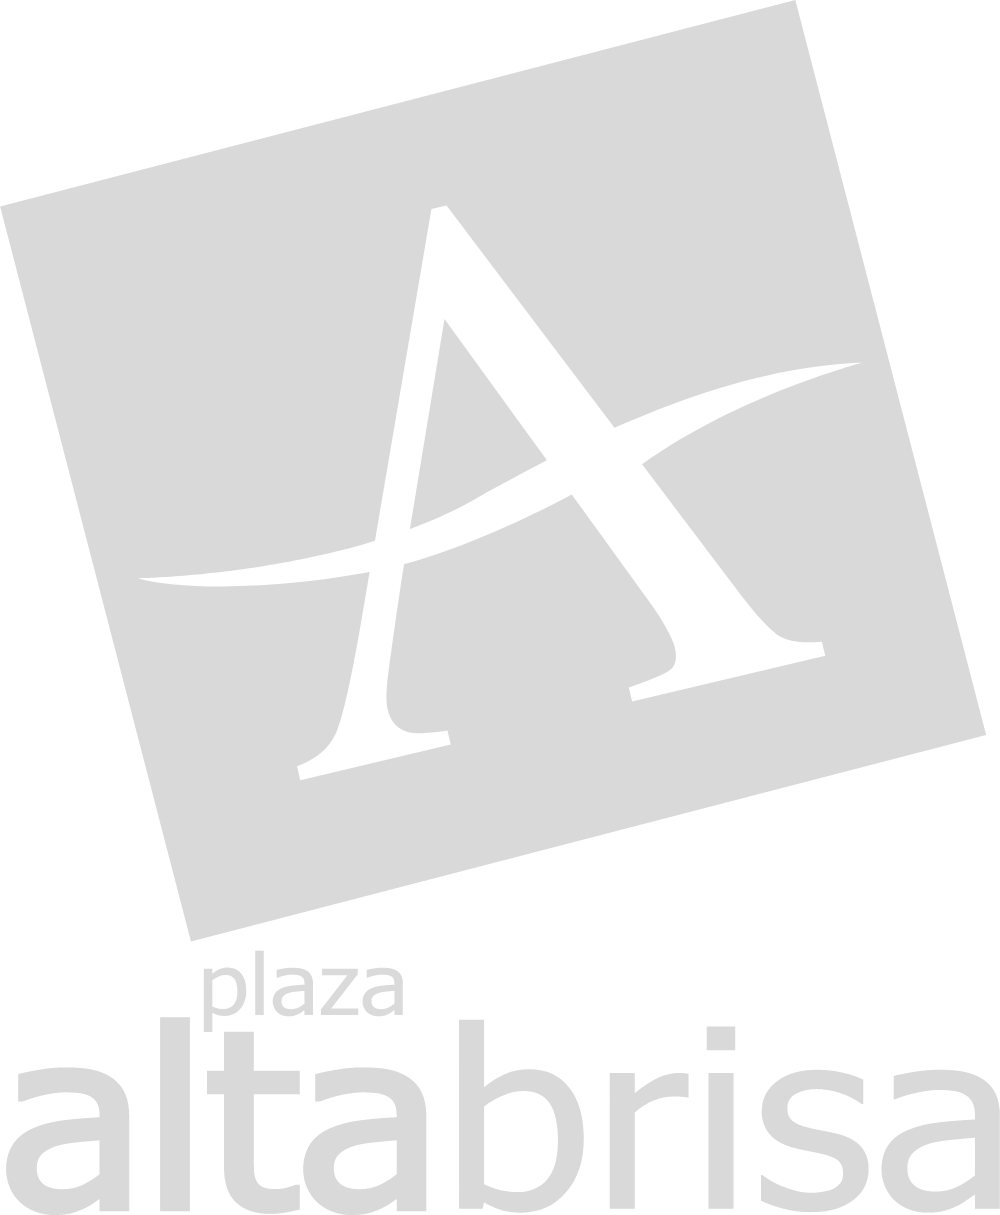 plaza altabrisa merida Logo Logos